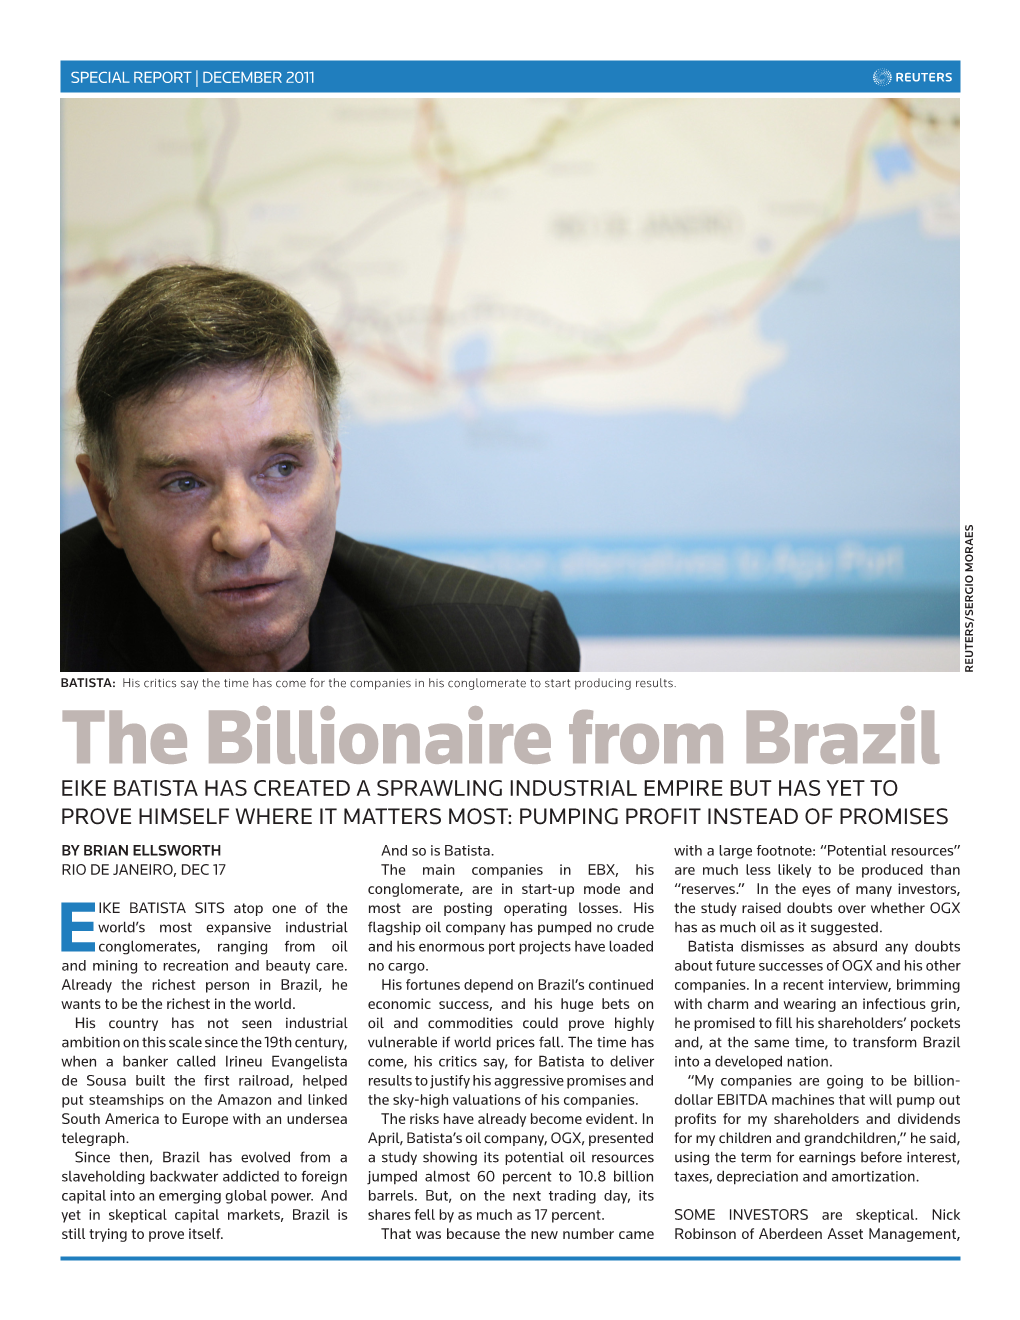 The Billionaire from Brazil